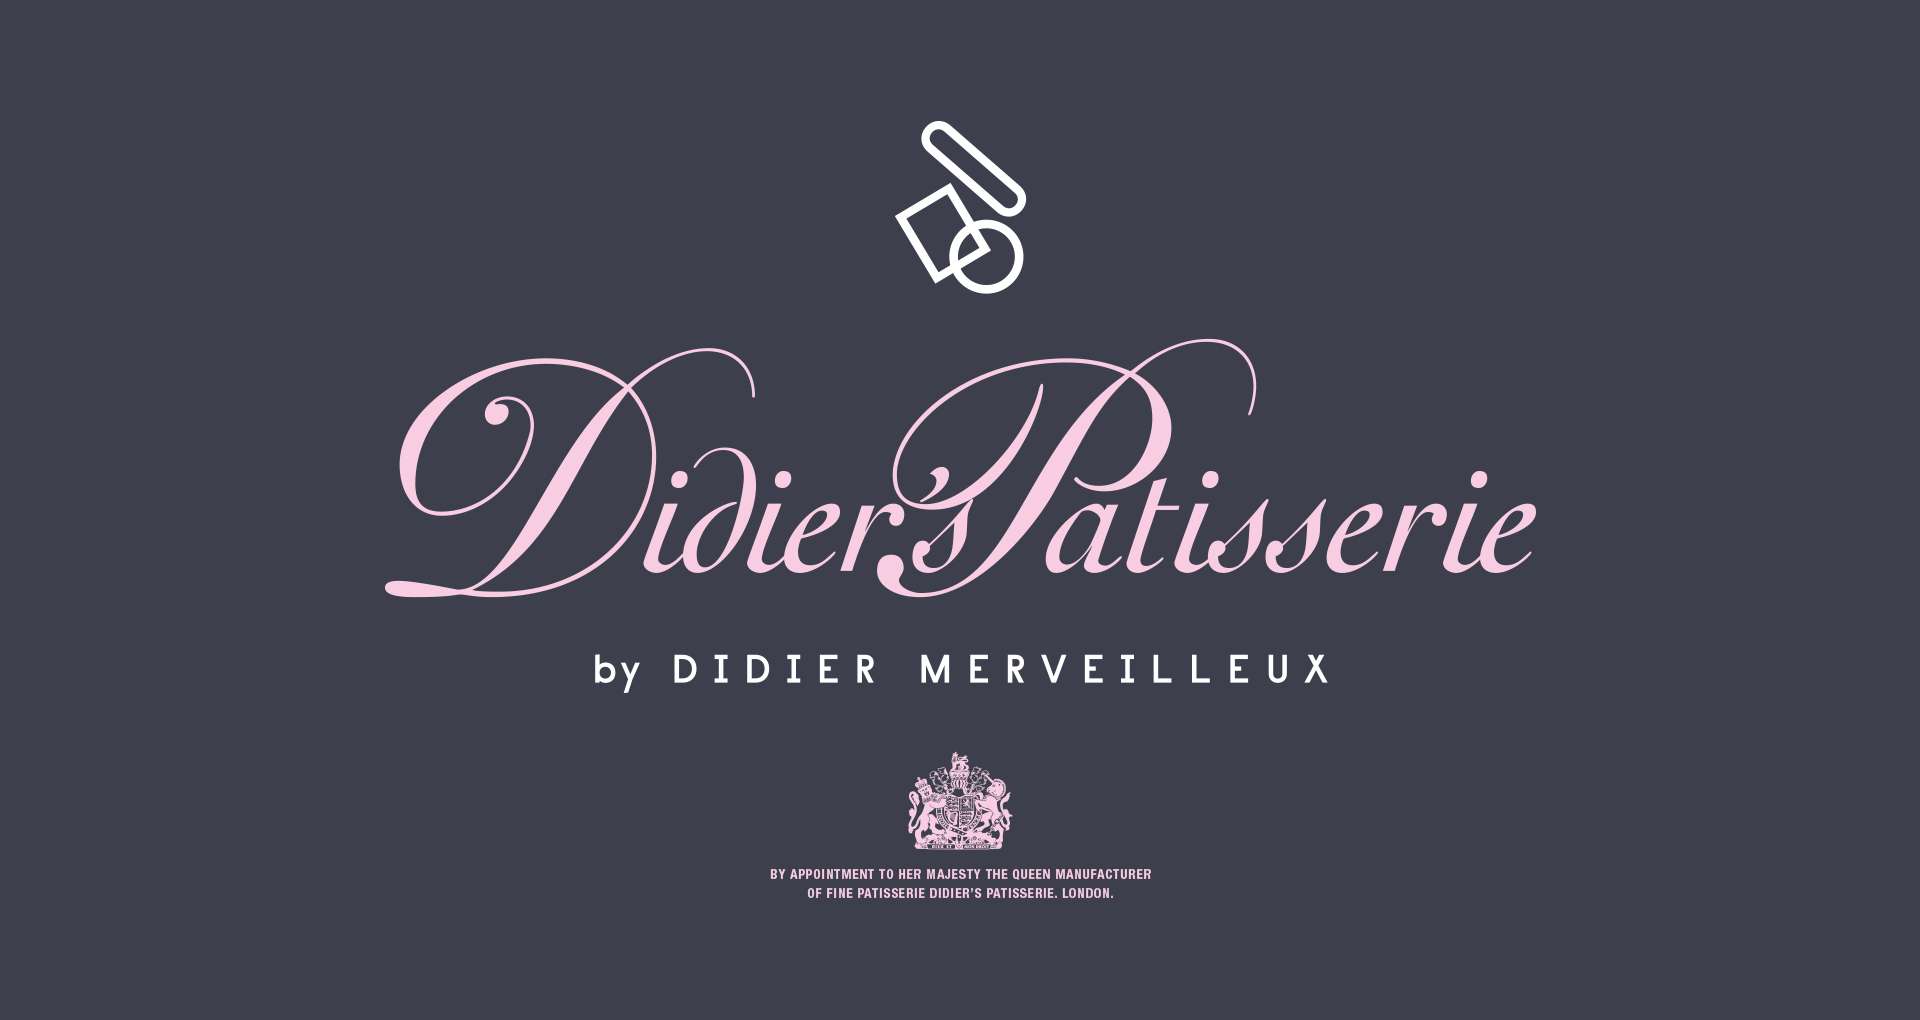 Didier's Patisserie